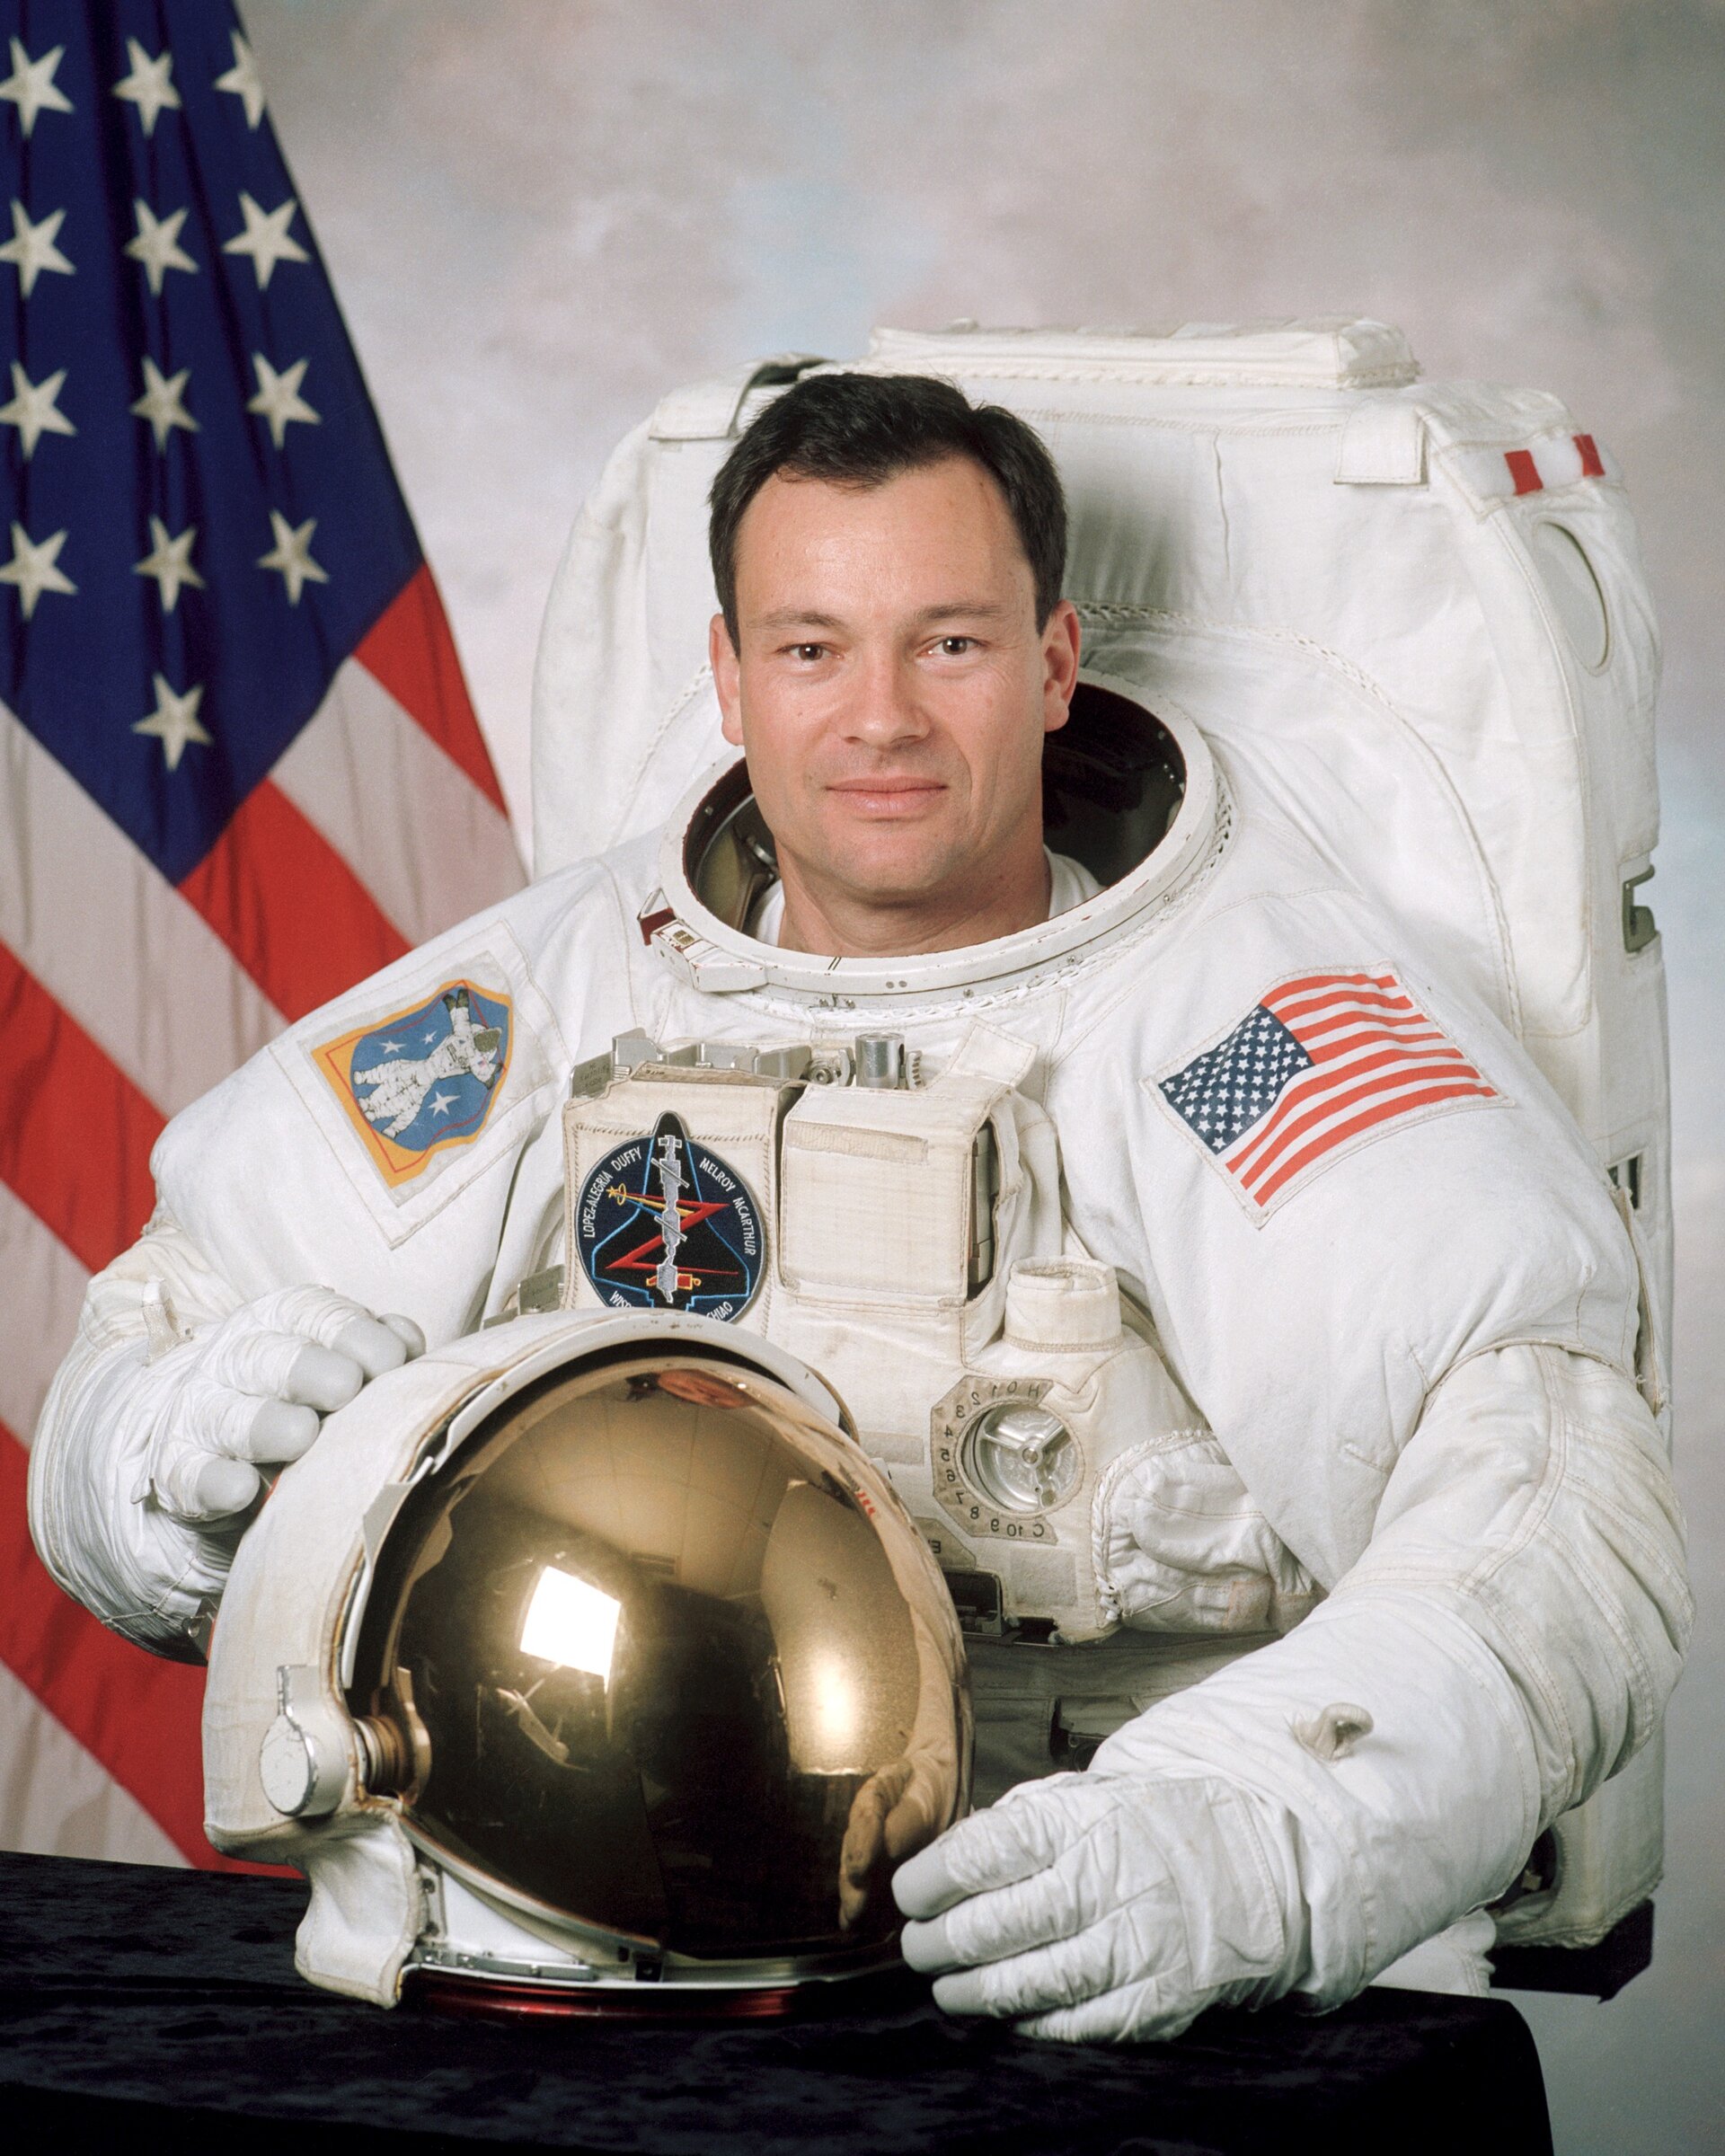 NASA-Astronaut Michael E. Lopez-Alegria